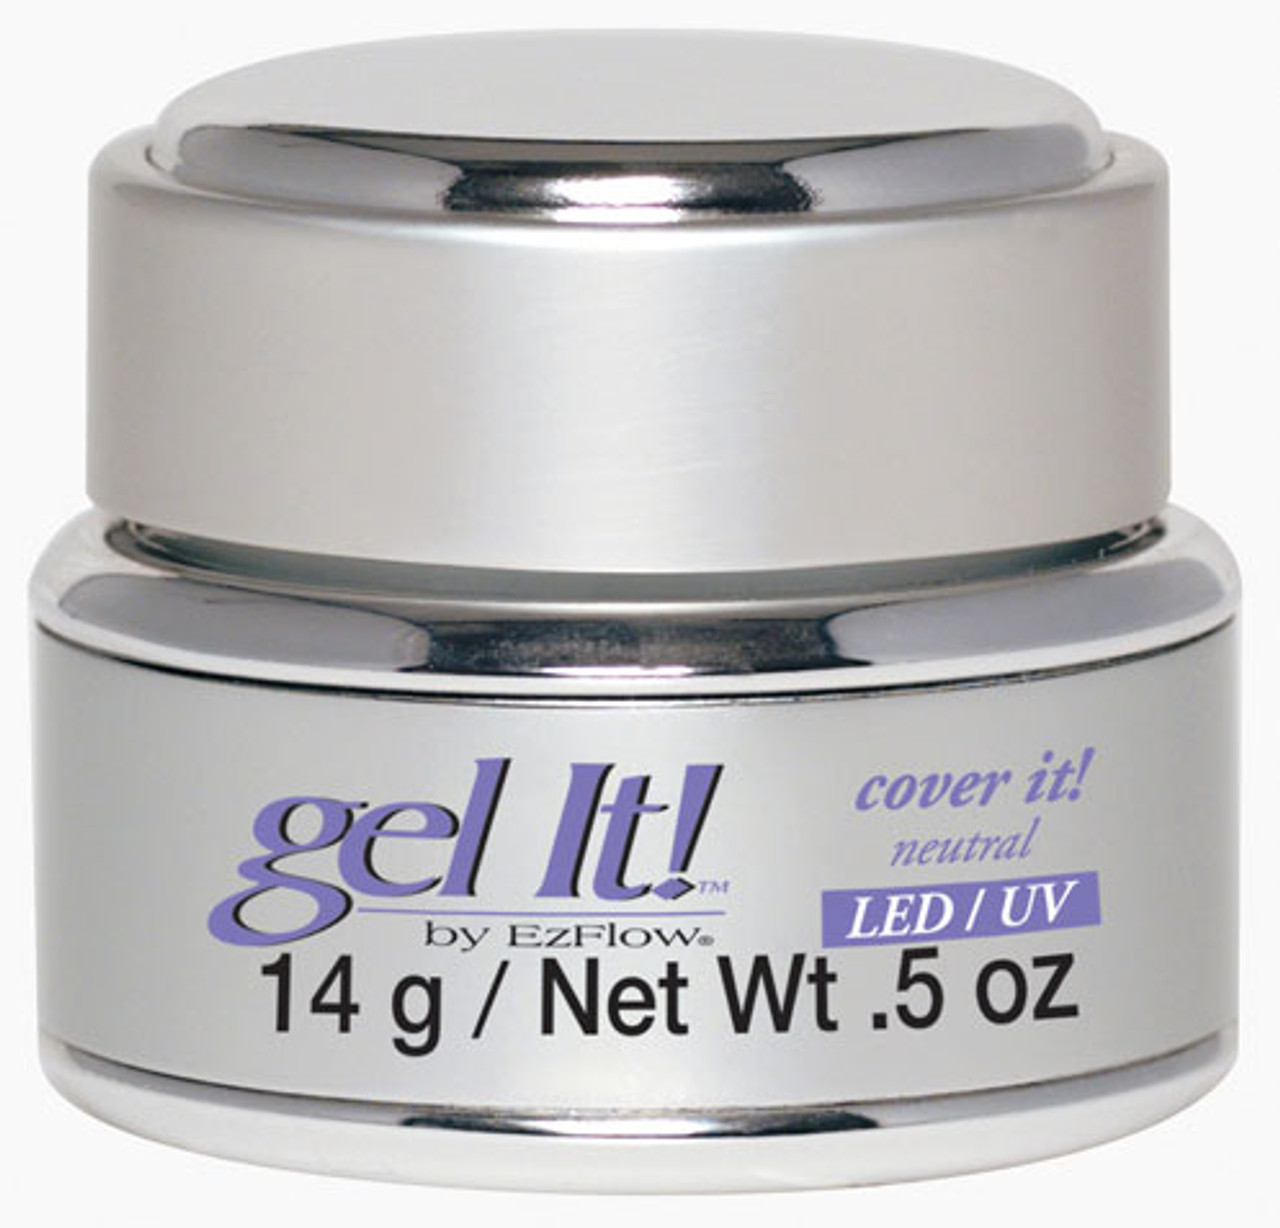 EzFlow LED/UV Gel It! Cover It! Neutral 14 g / Net Wt. .5 oz